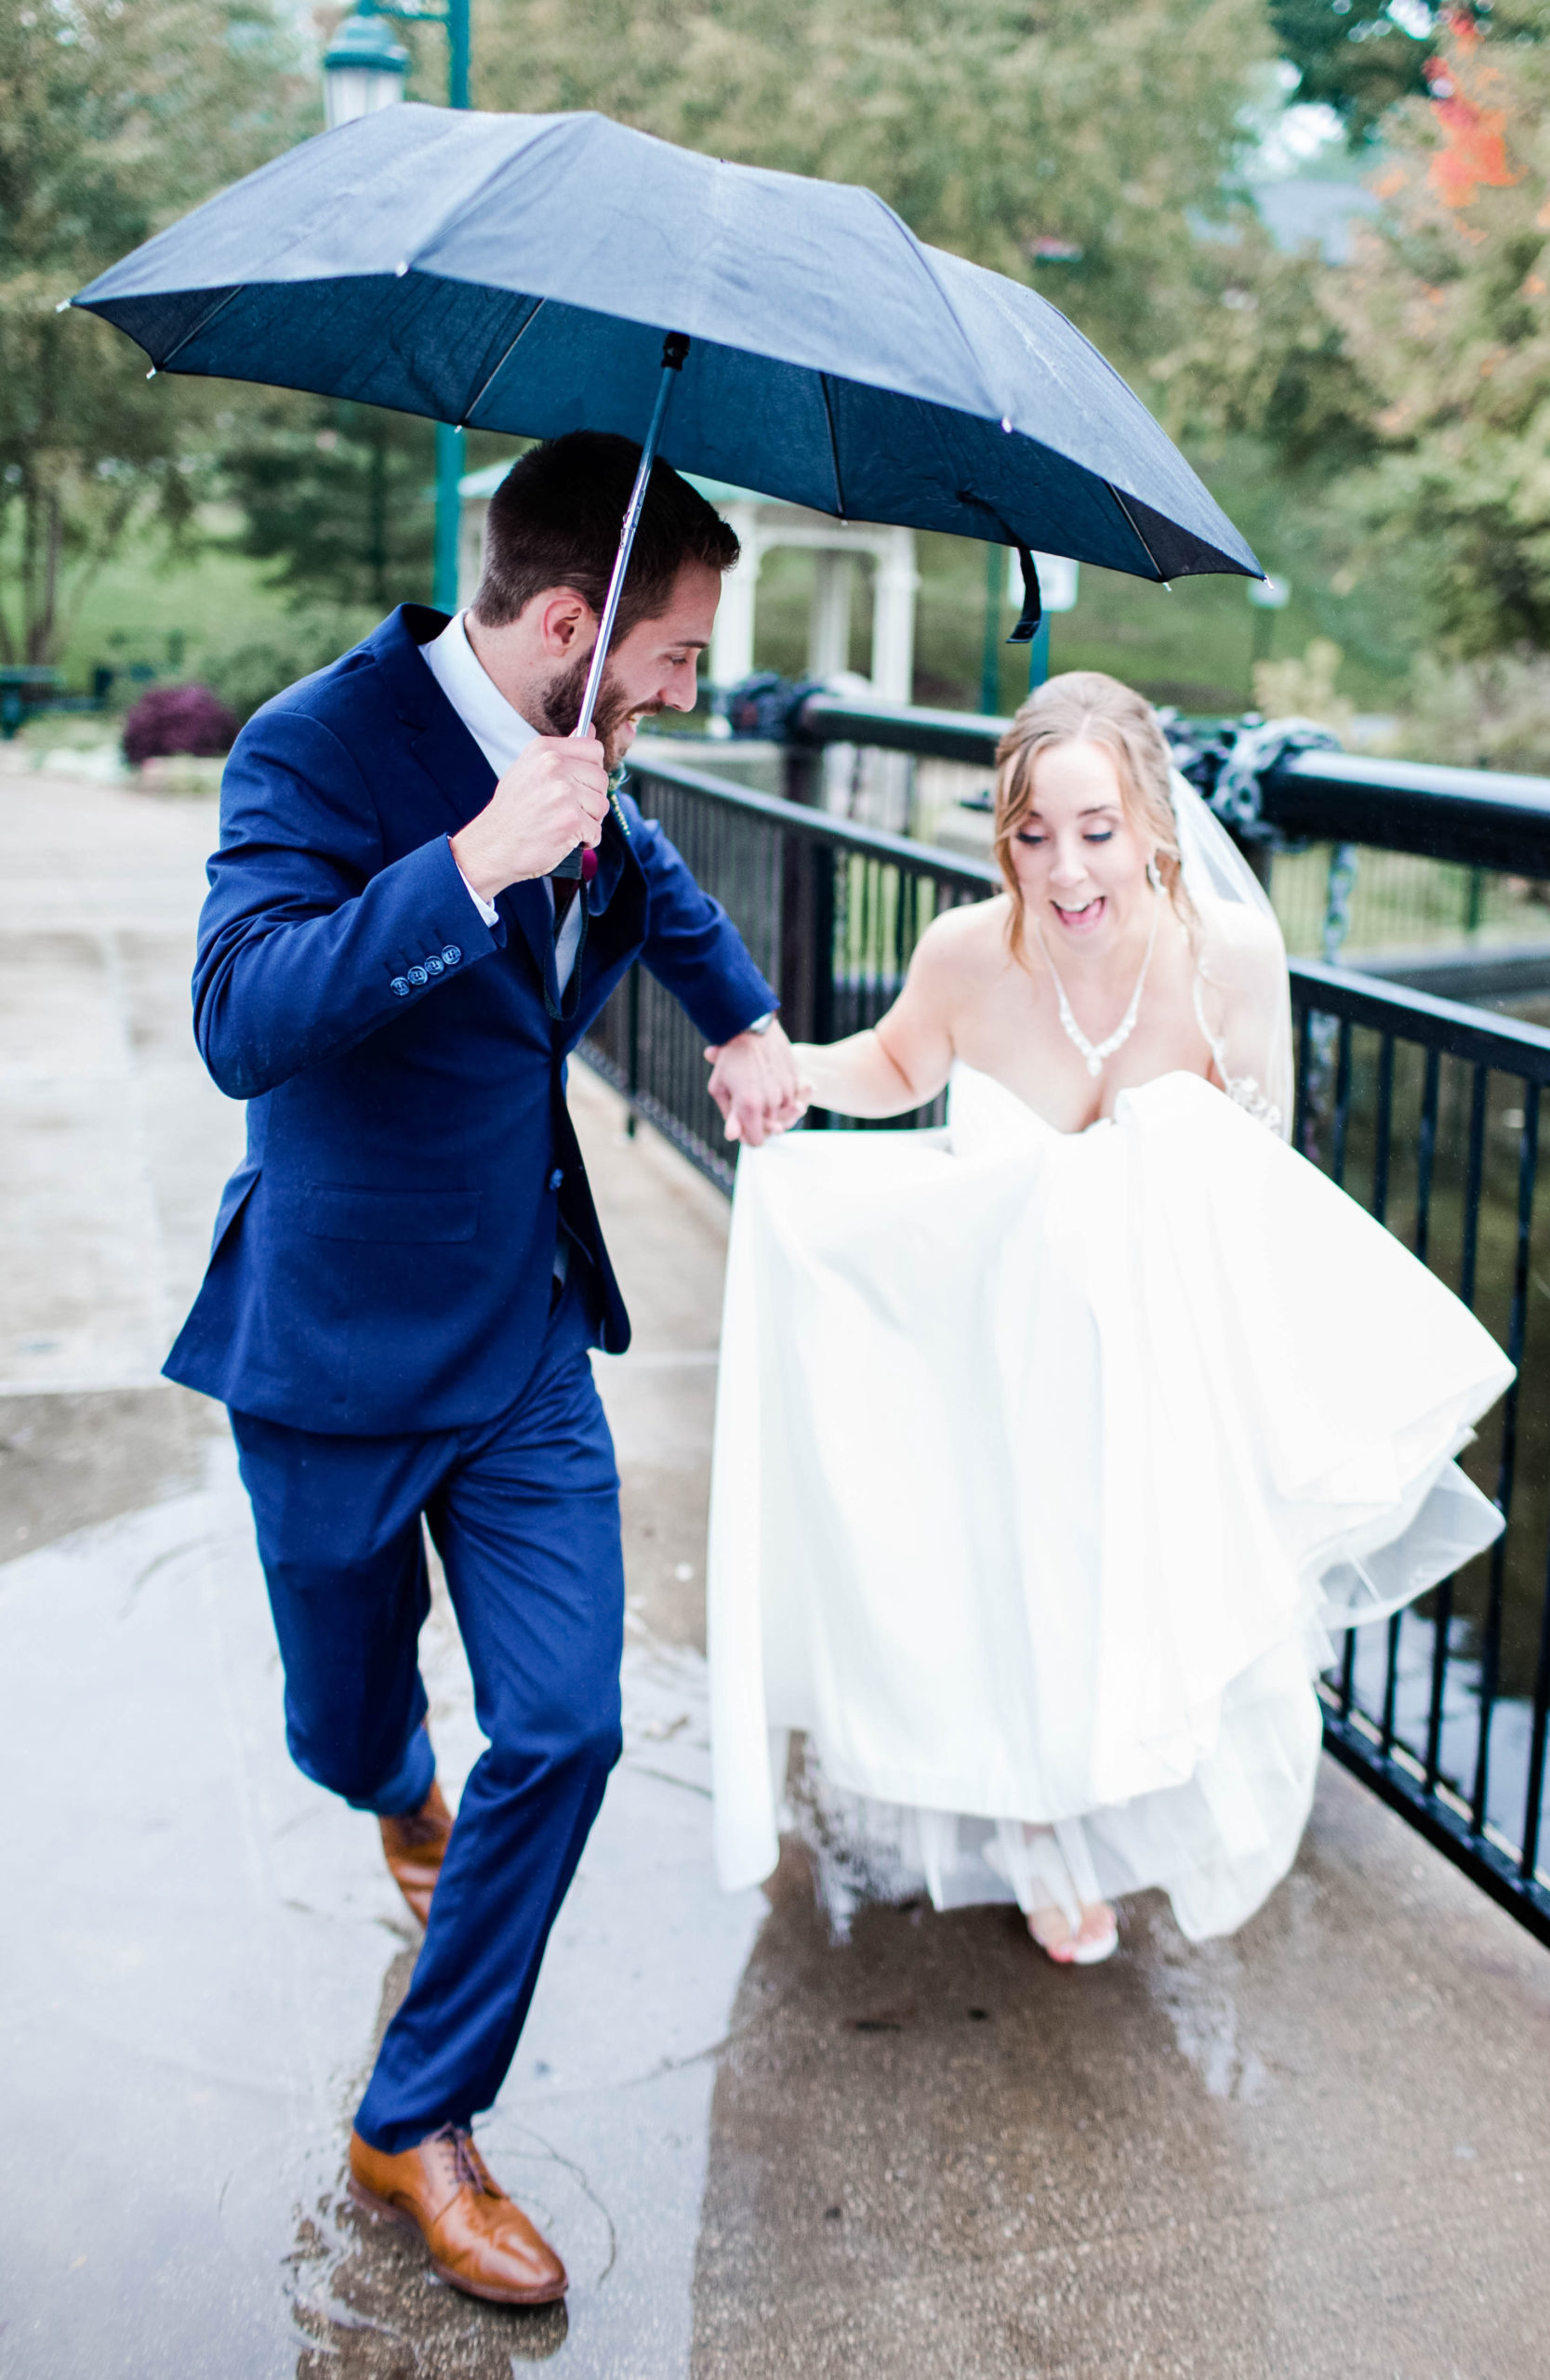 Rain on your wedding day